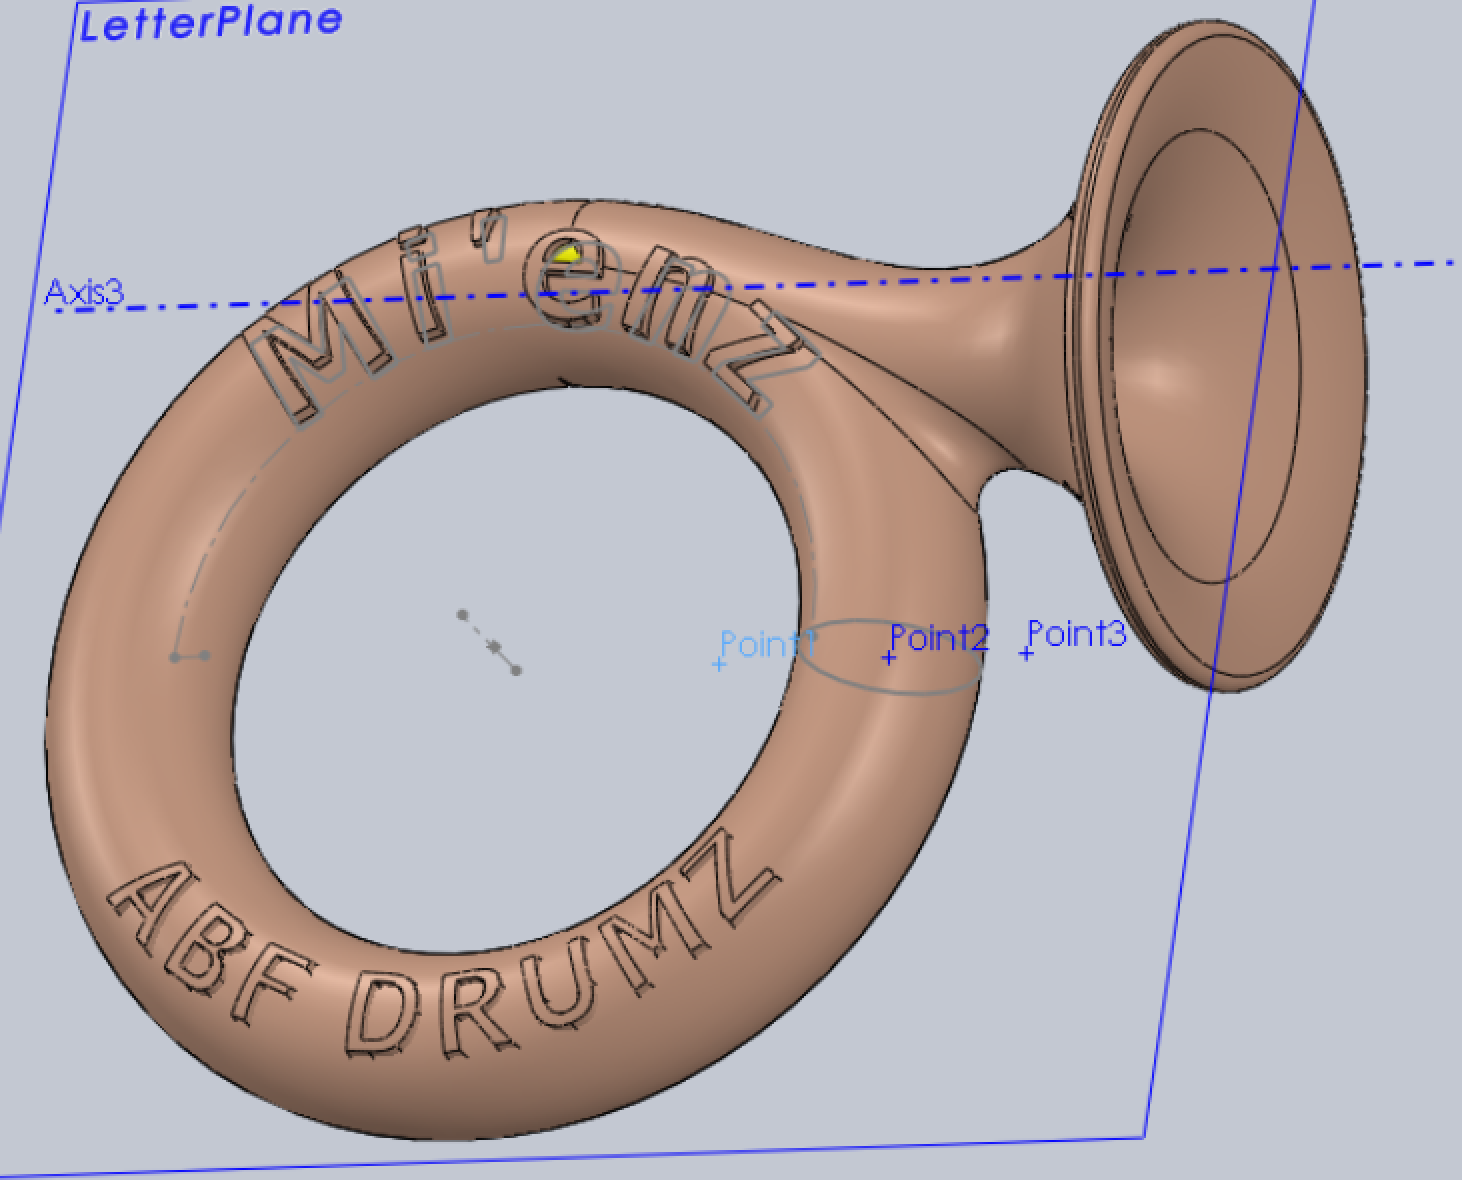 A CAD mockup of my design